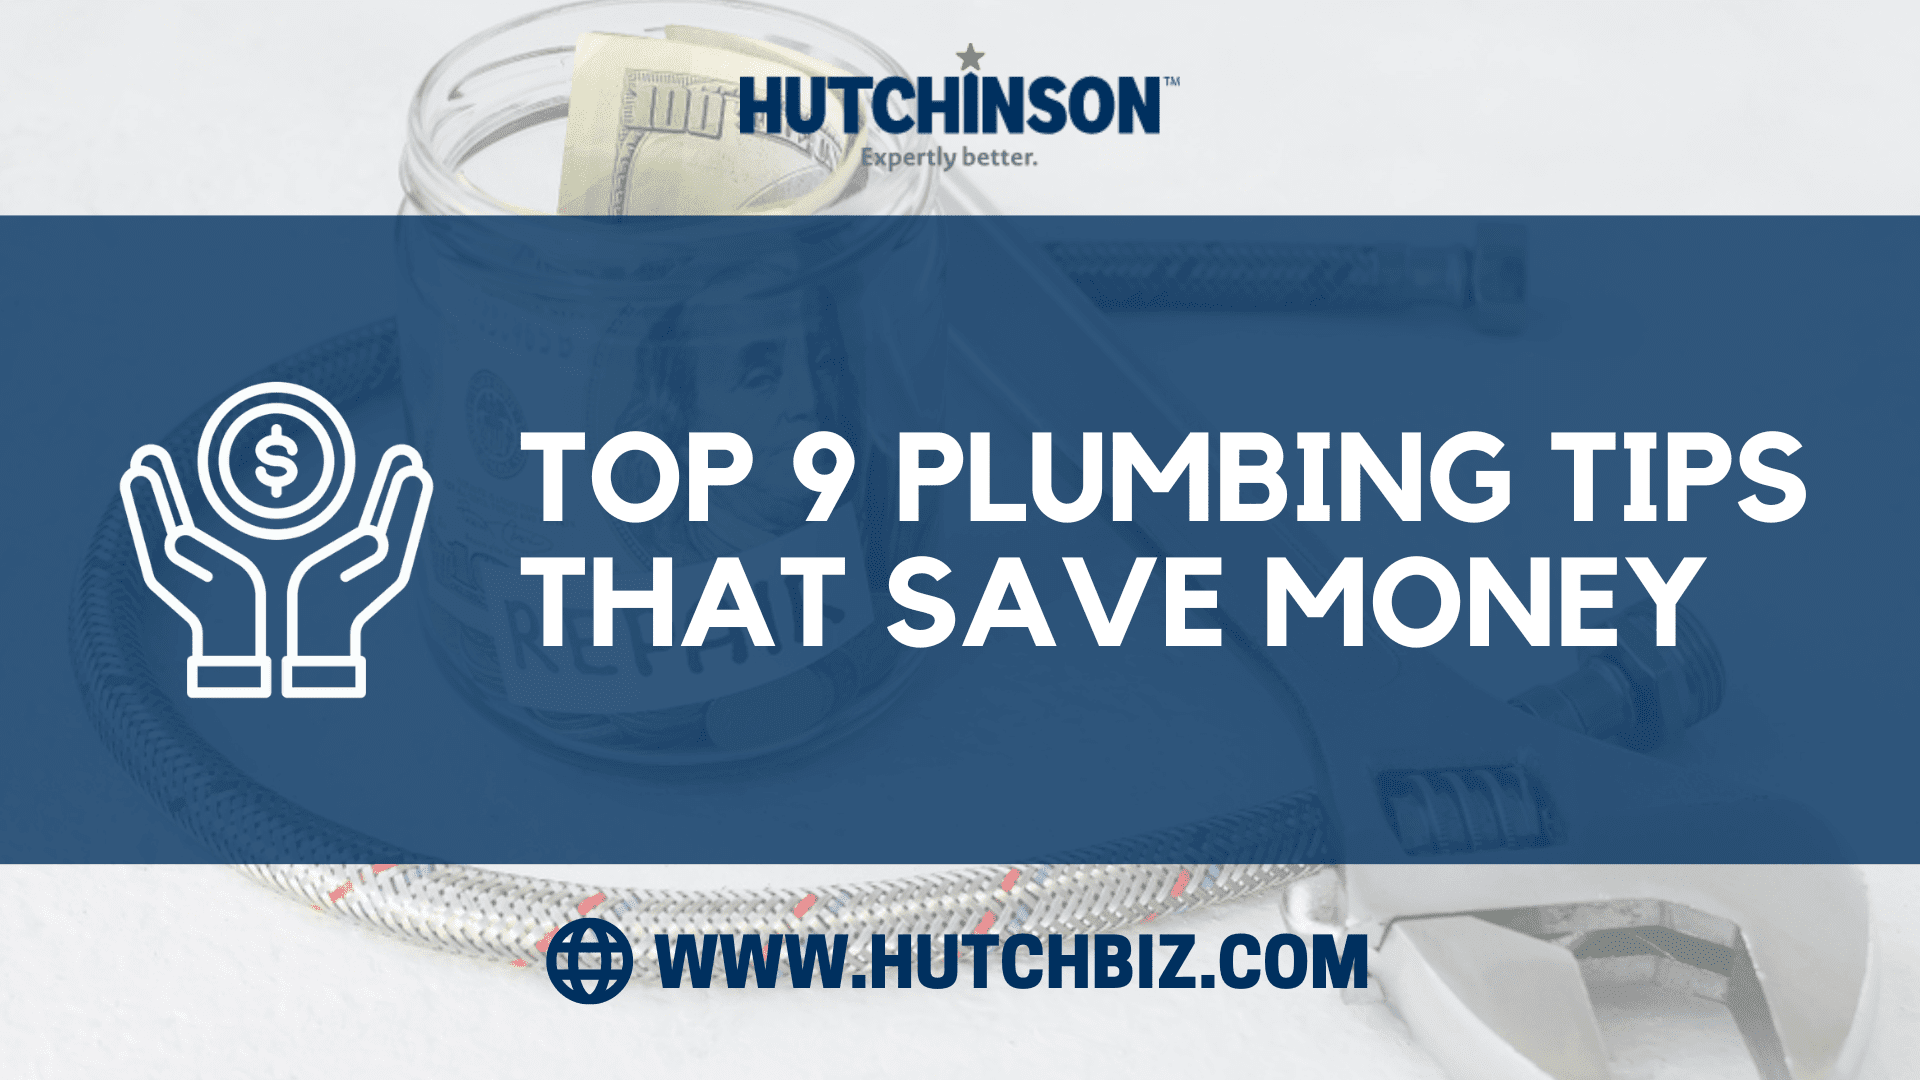 Top 9 Plumbing Tips That Save Money